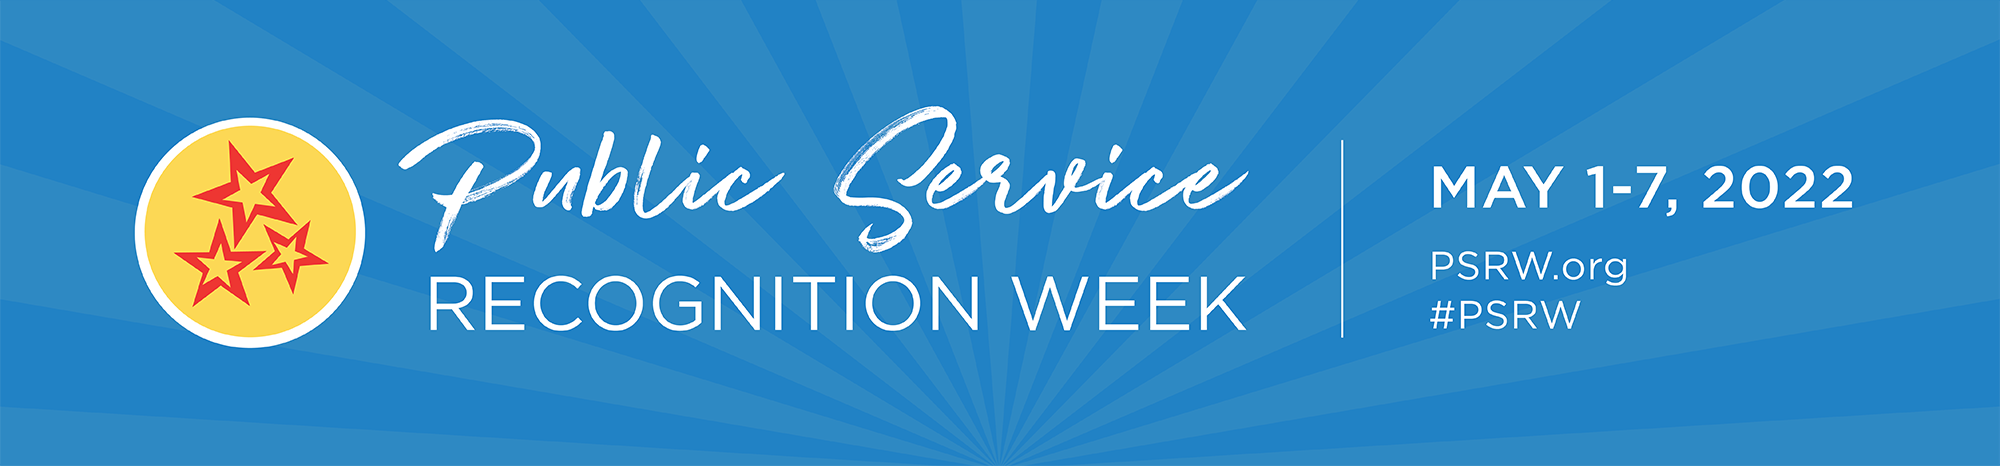 Public Service Recognition Week 2022